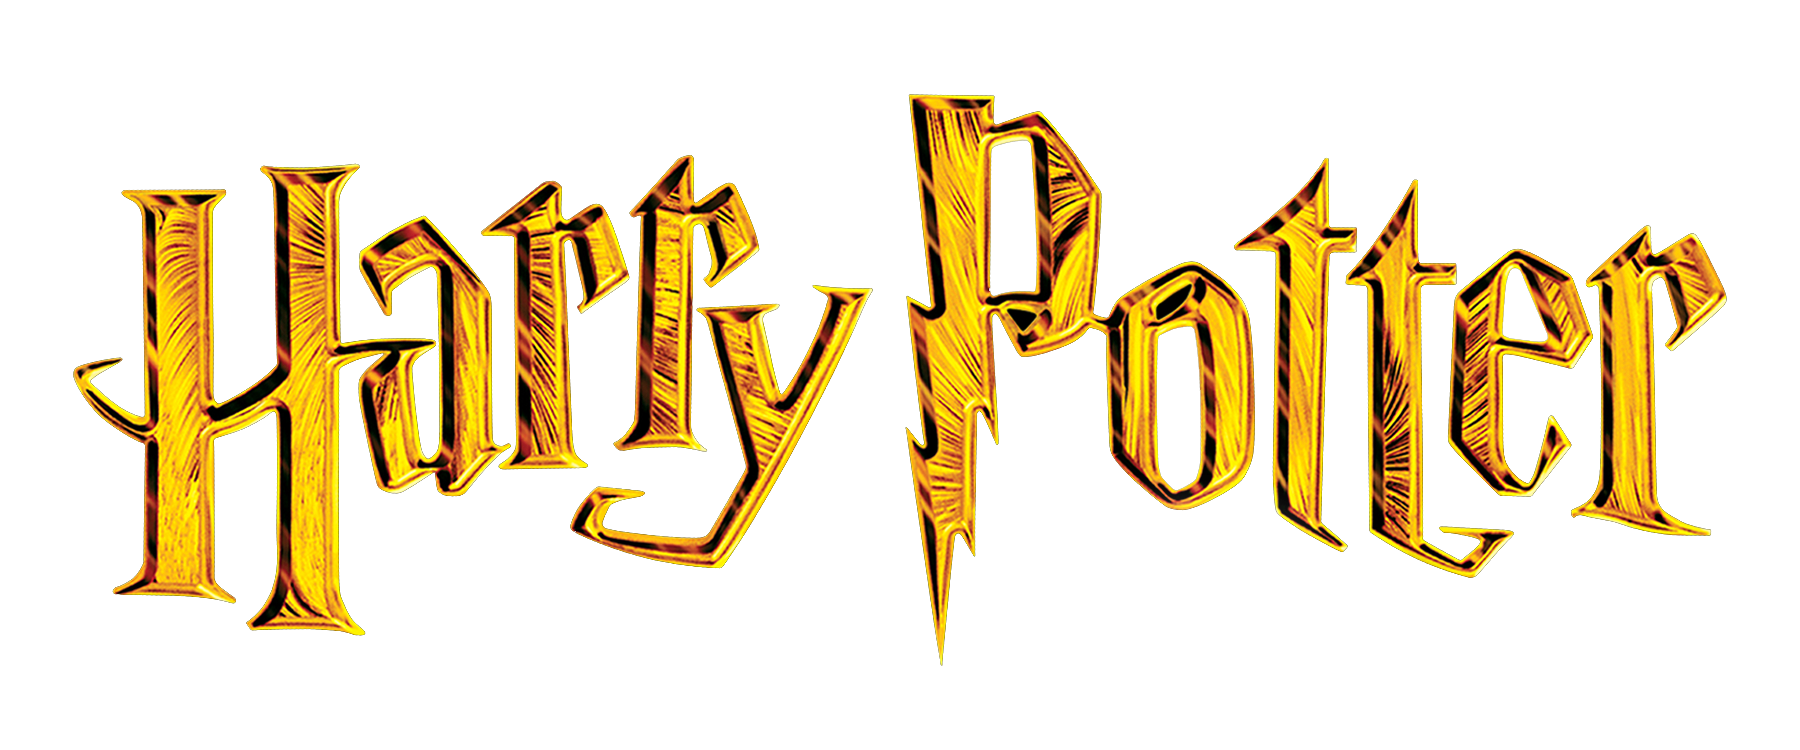 Funko POP! Harry Potter #27 Albus Dumbledore with Hogwarts – MOP